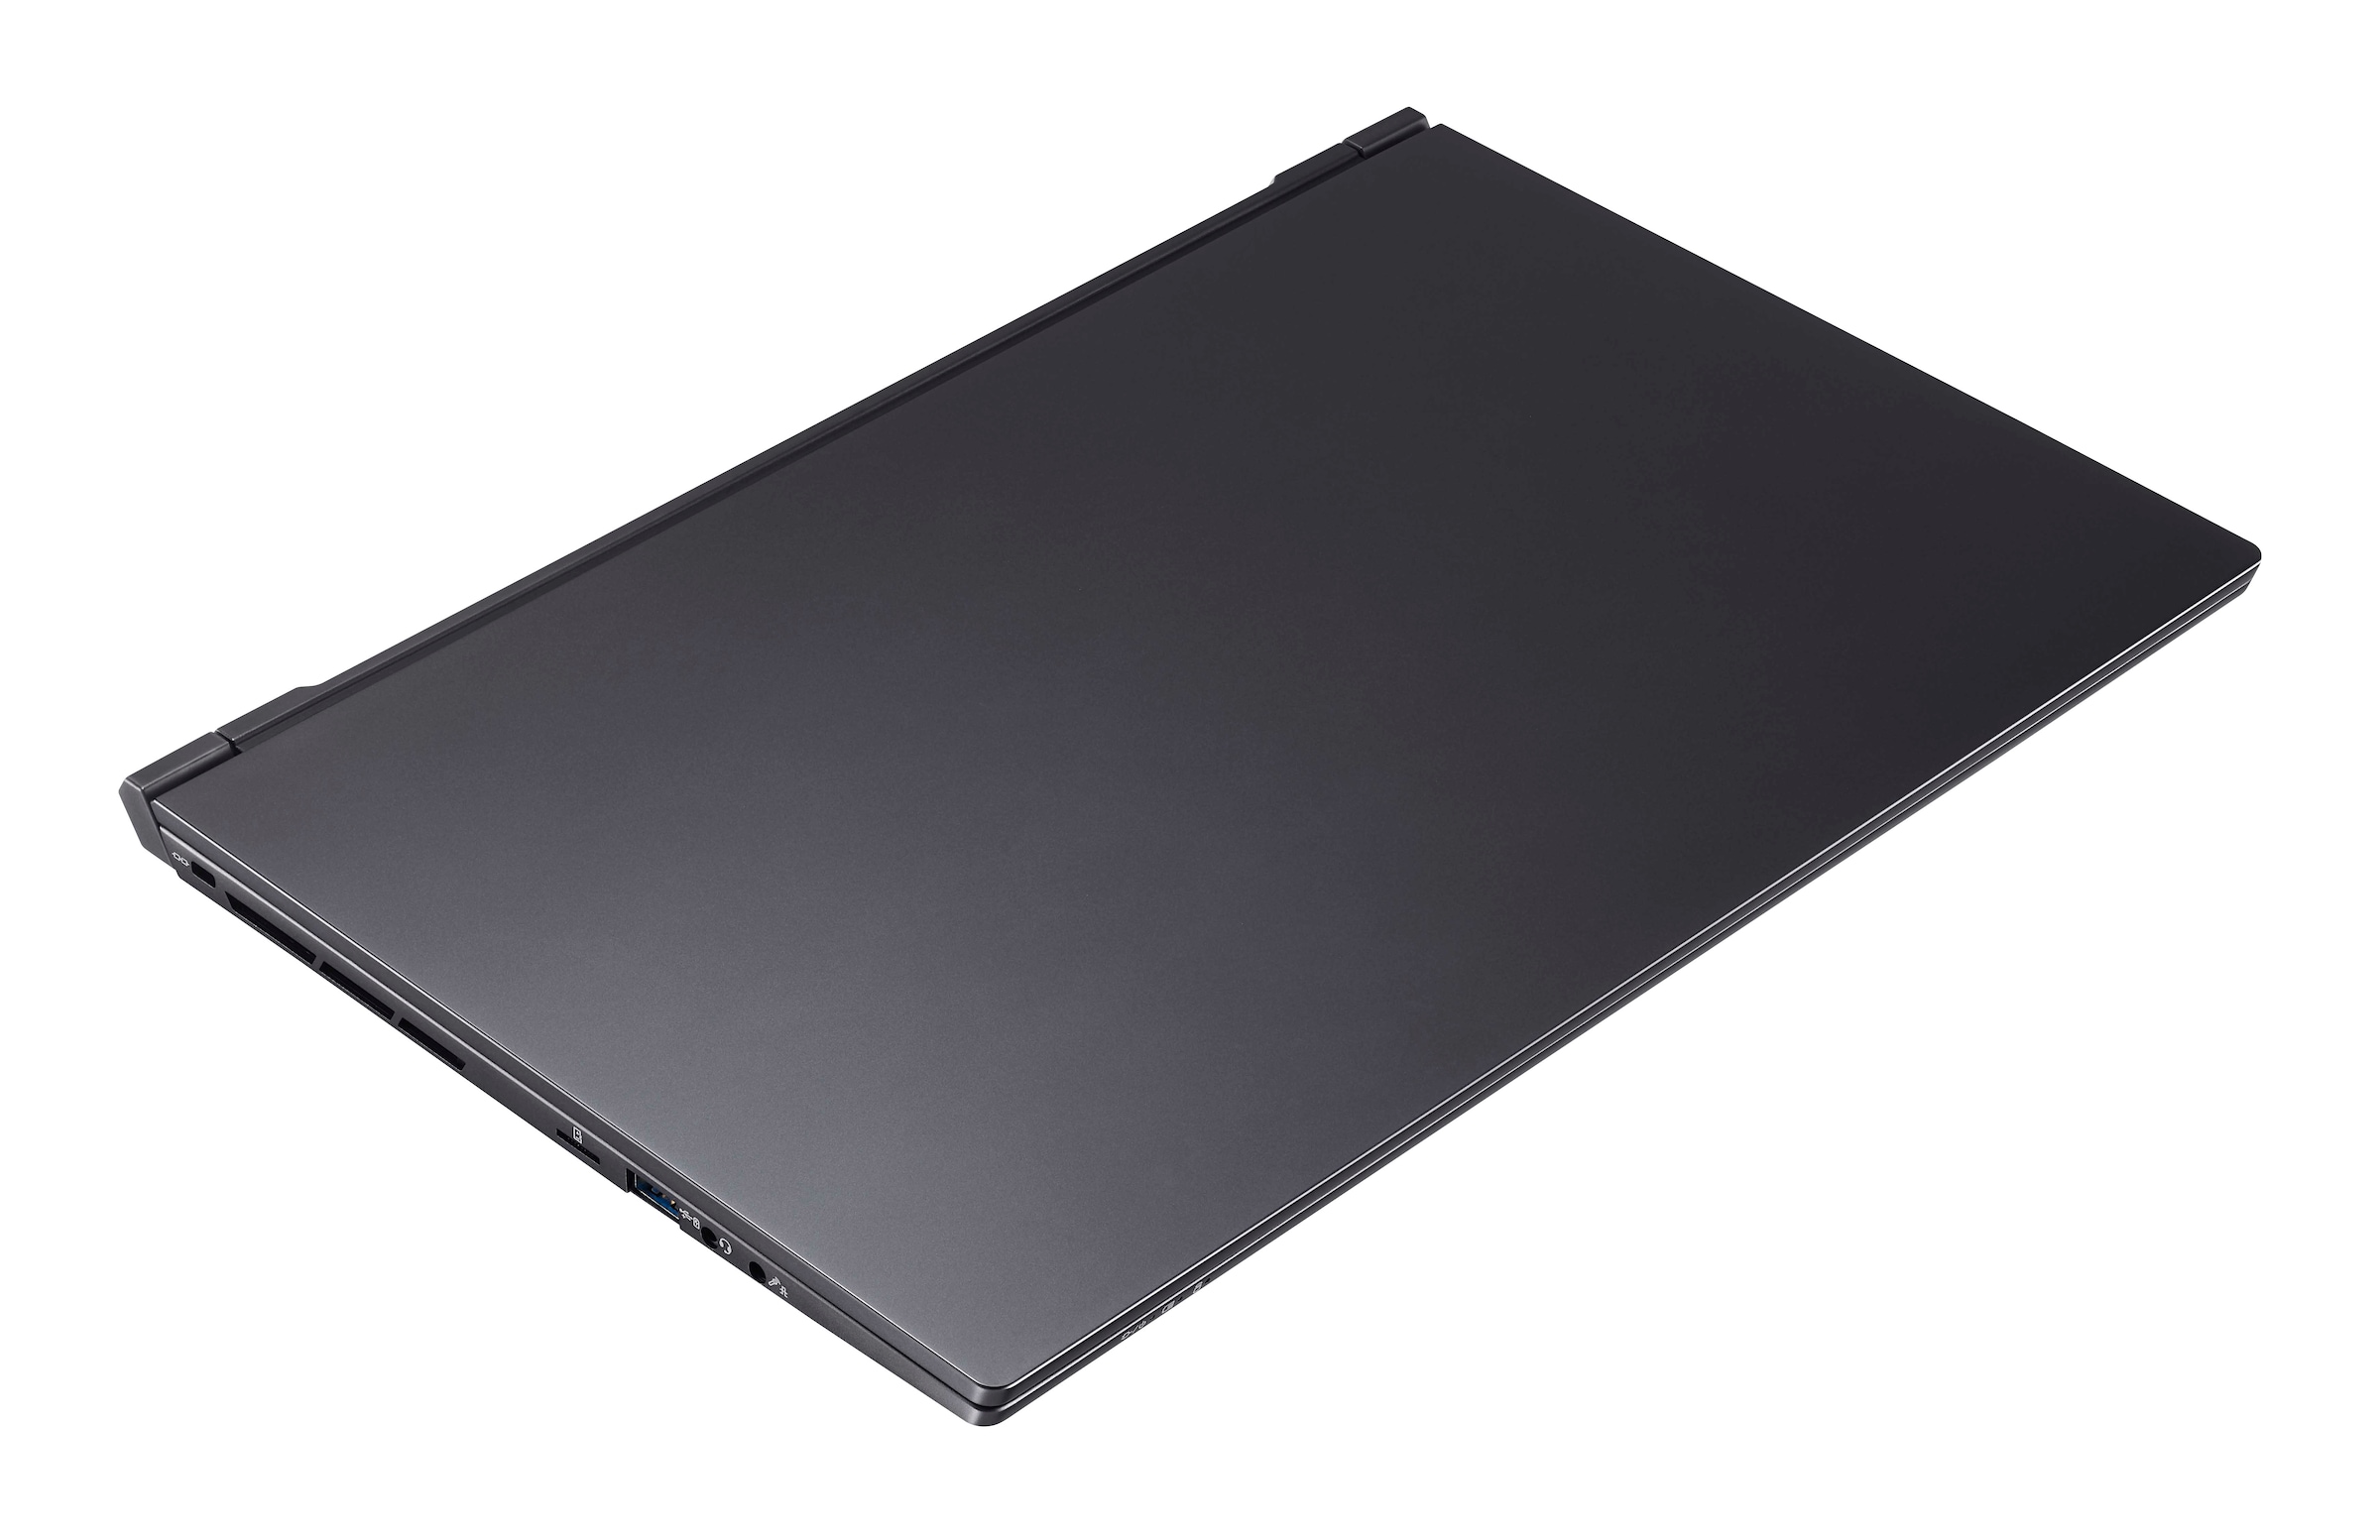 Hyrican Gaming-Notebook »Striker 1637«, 39,62 cm, / 15,6 Zoll, Intel, Core i7, GeForce RTX 3080 Max.Q, 1000 GB SSD, 240 Hz Display, 32 GB RAM